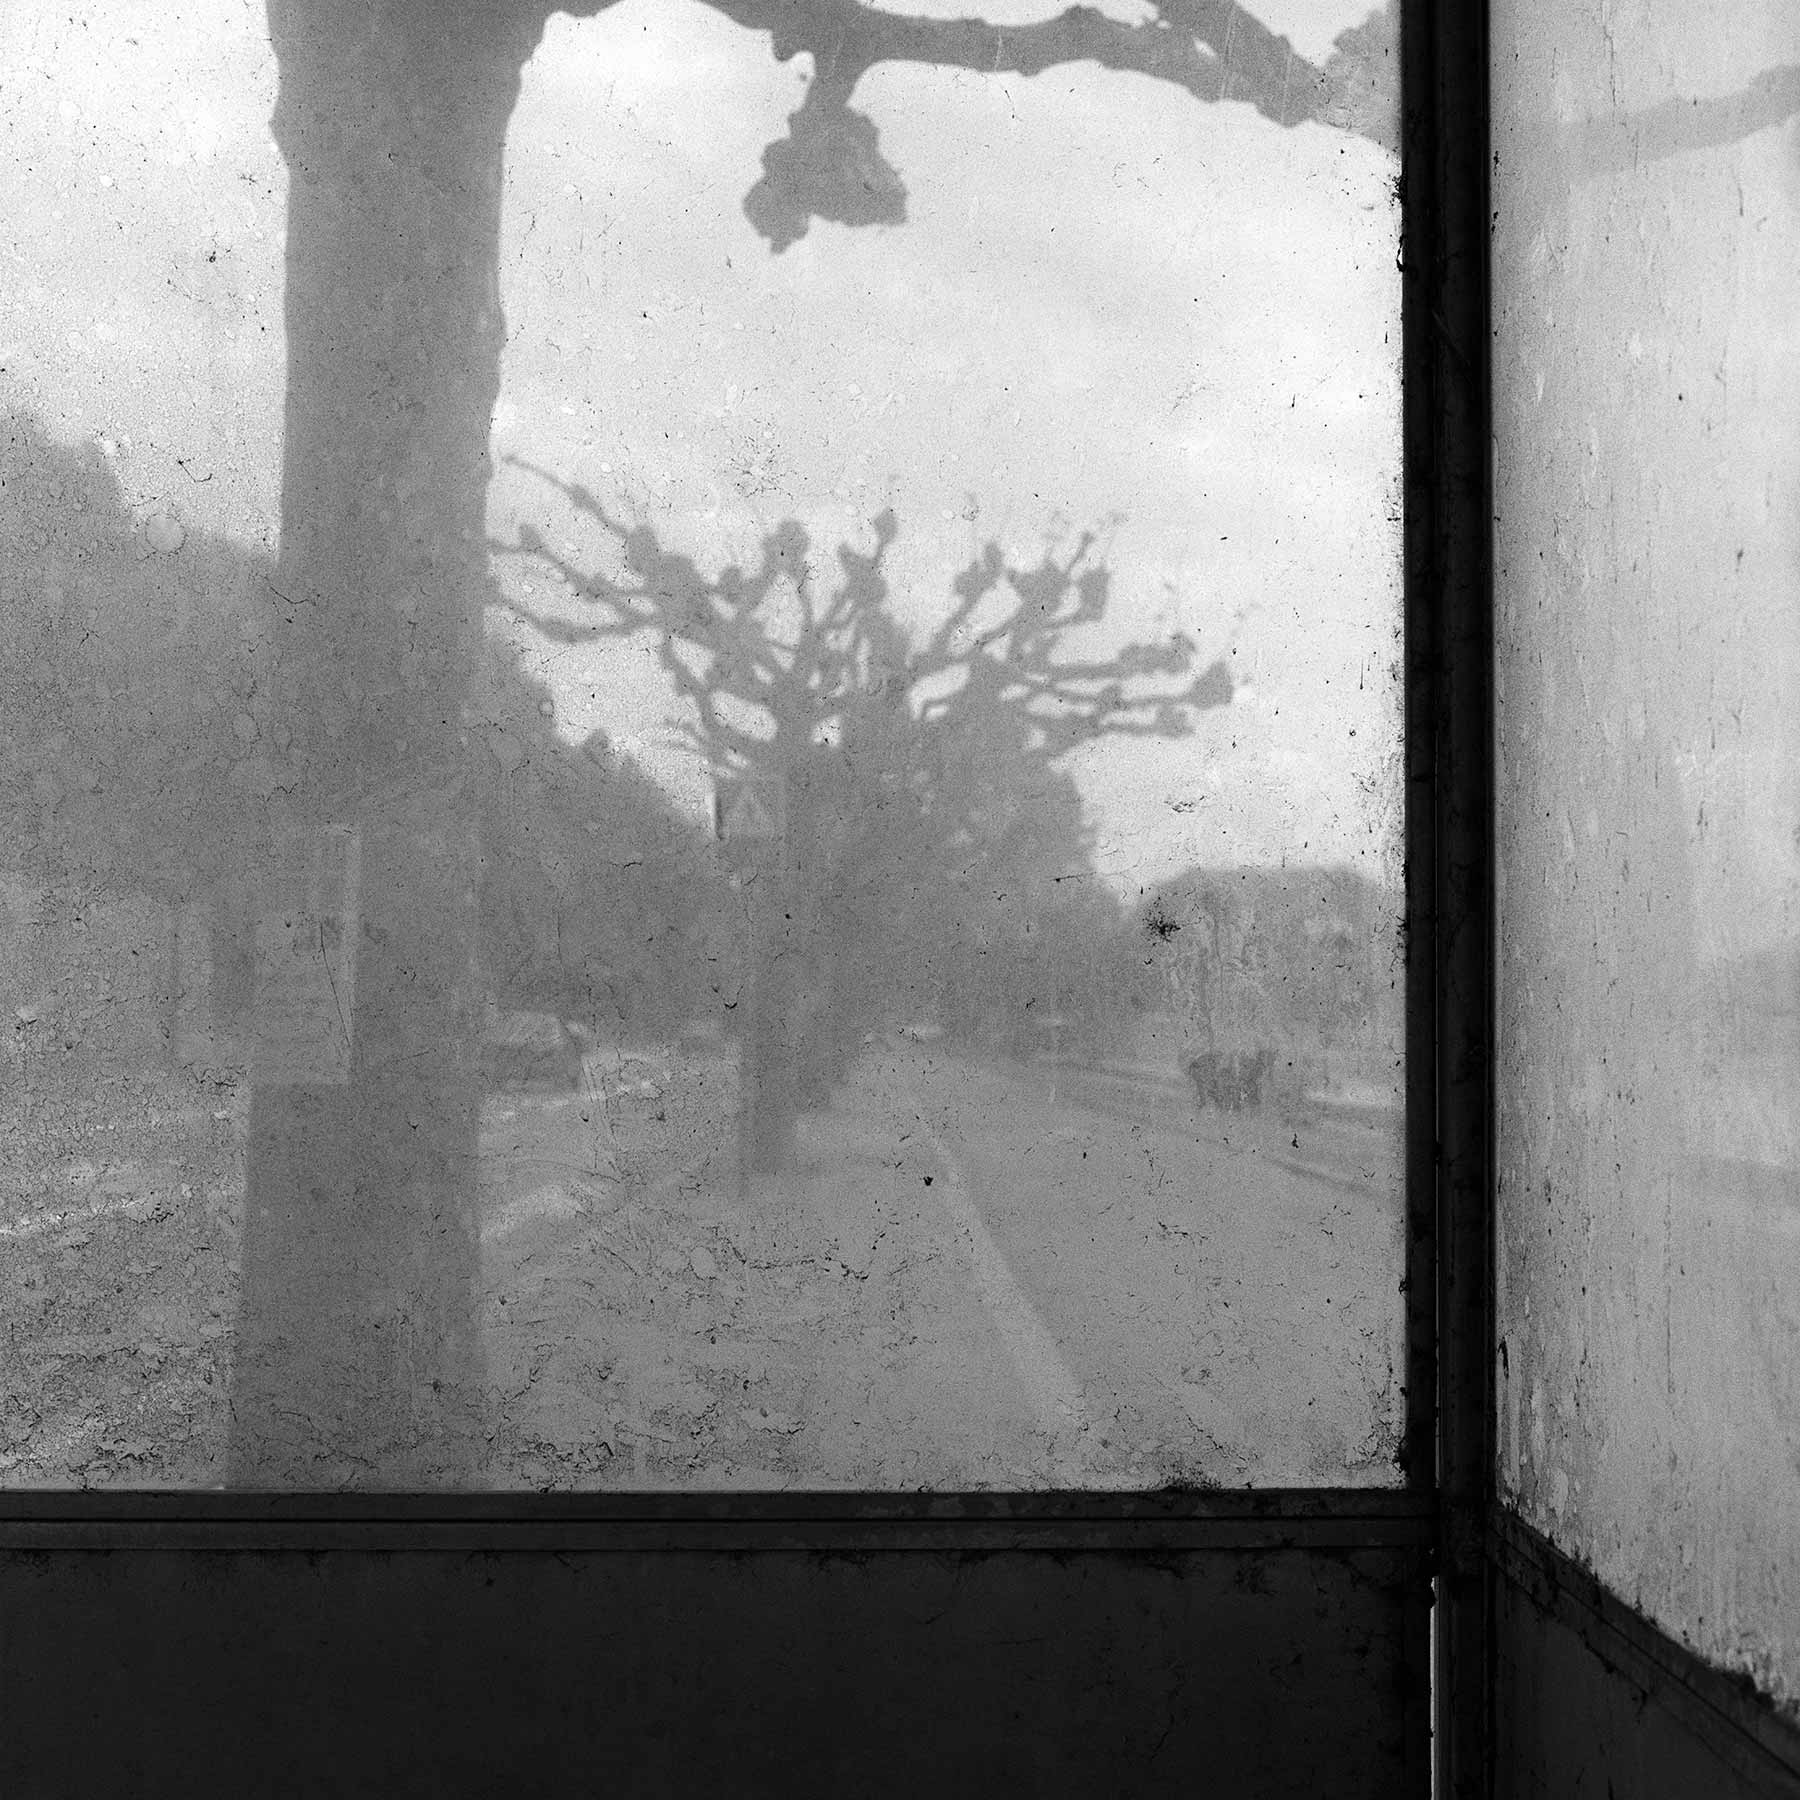 Dirty bus stop window – Quai de Cologny, Geneva, Switzerland, 1981